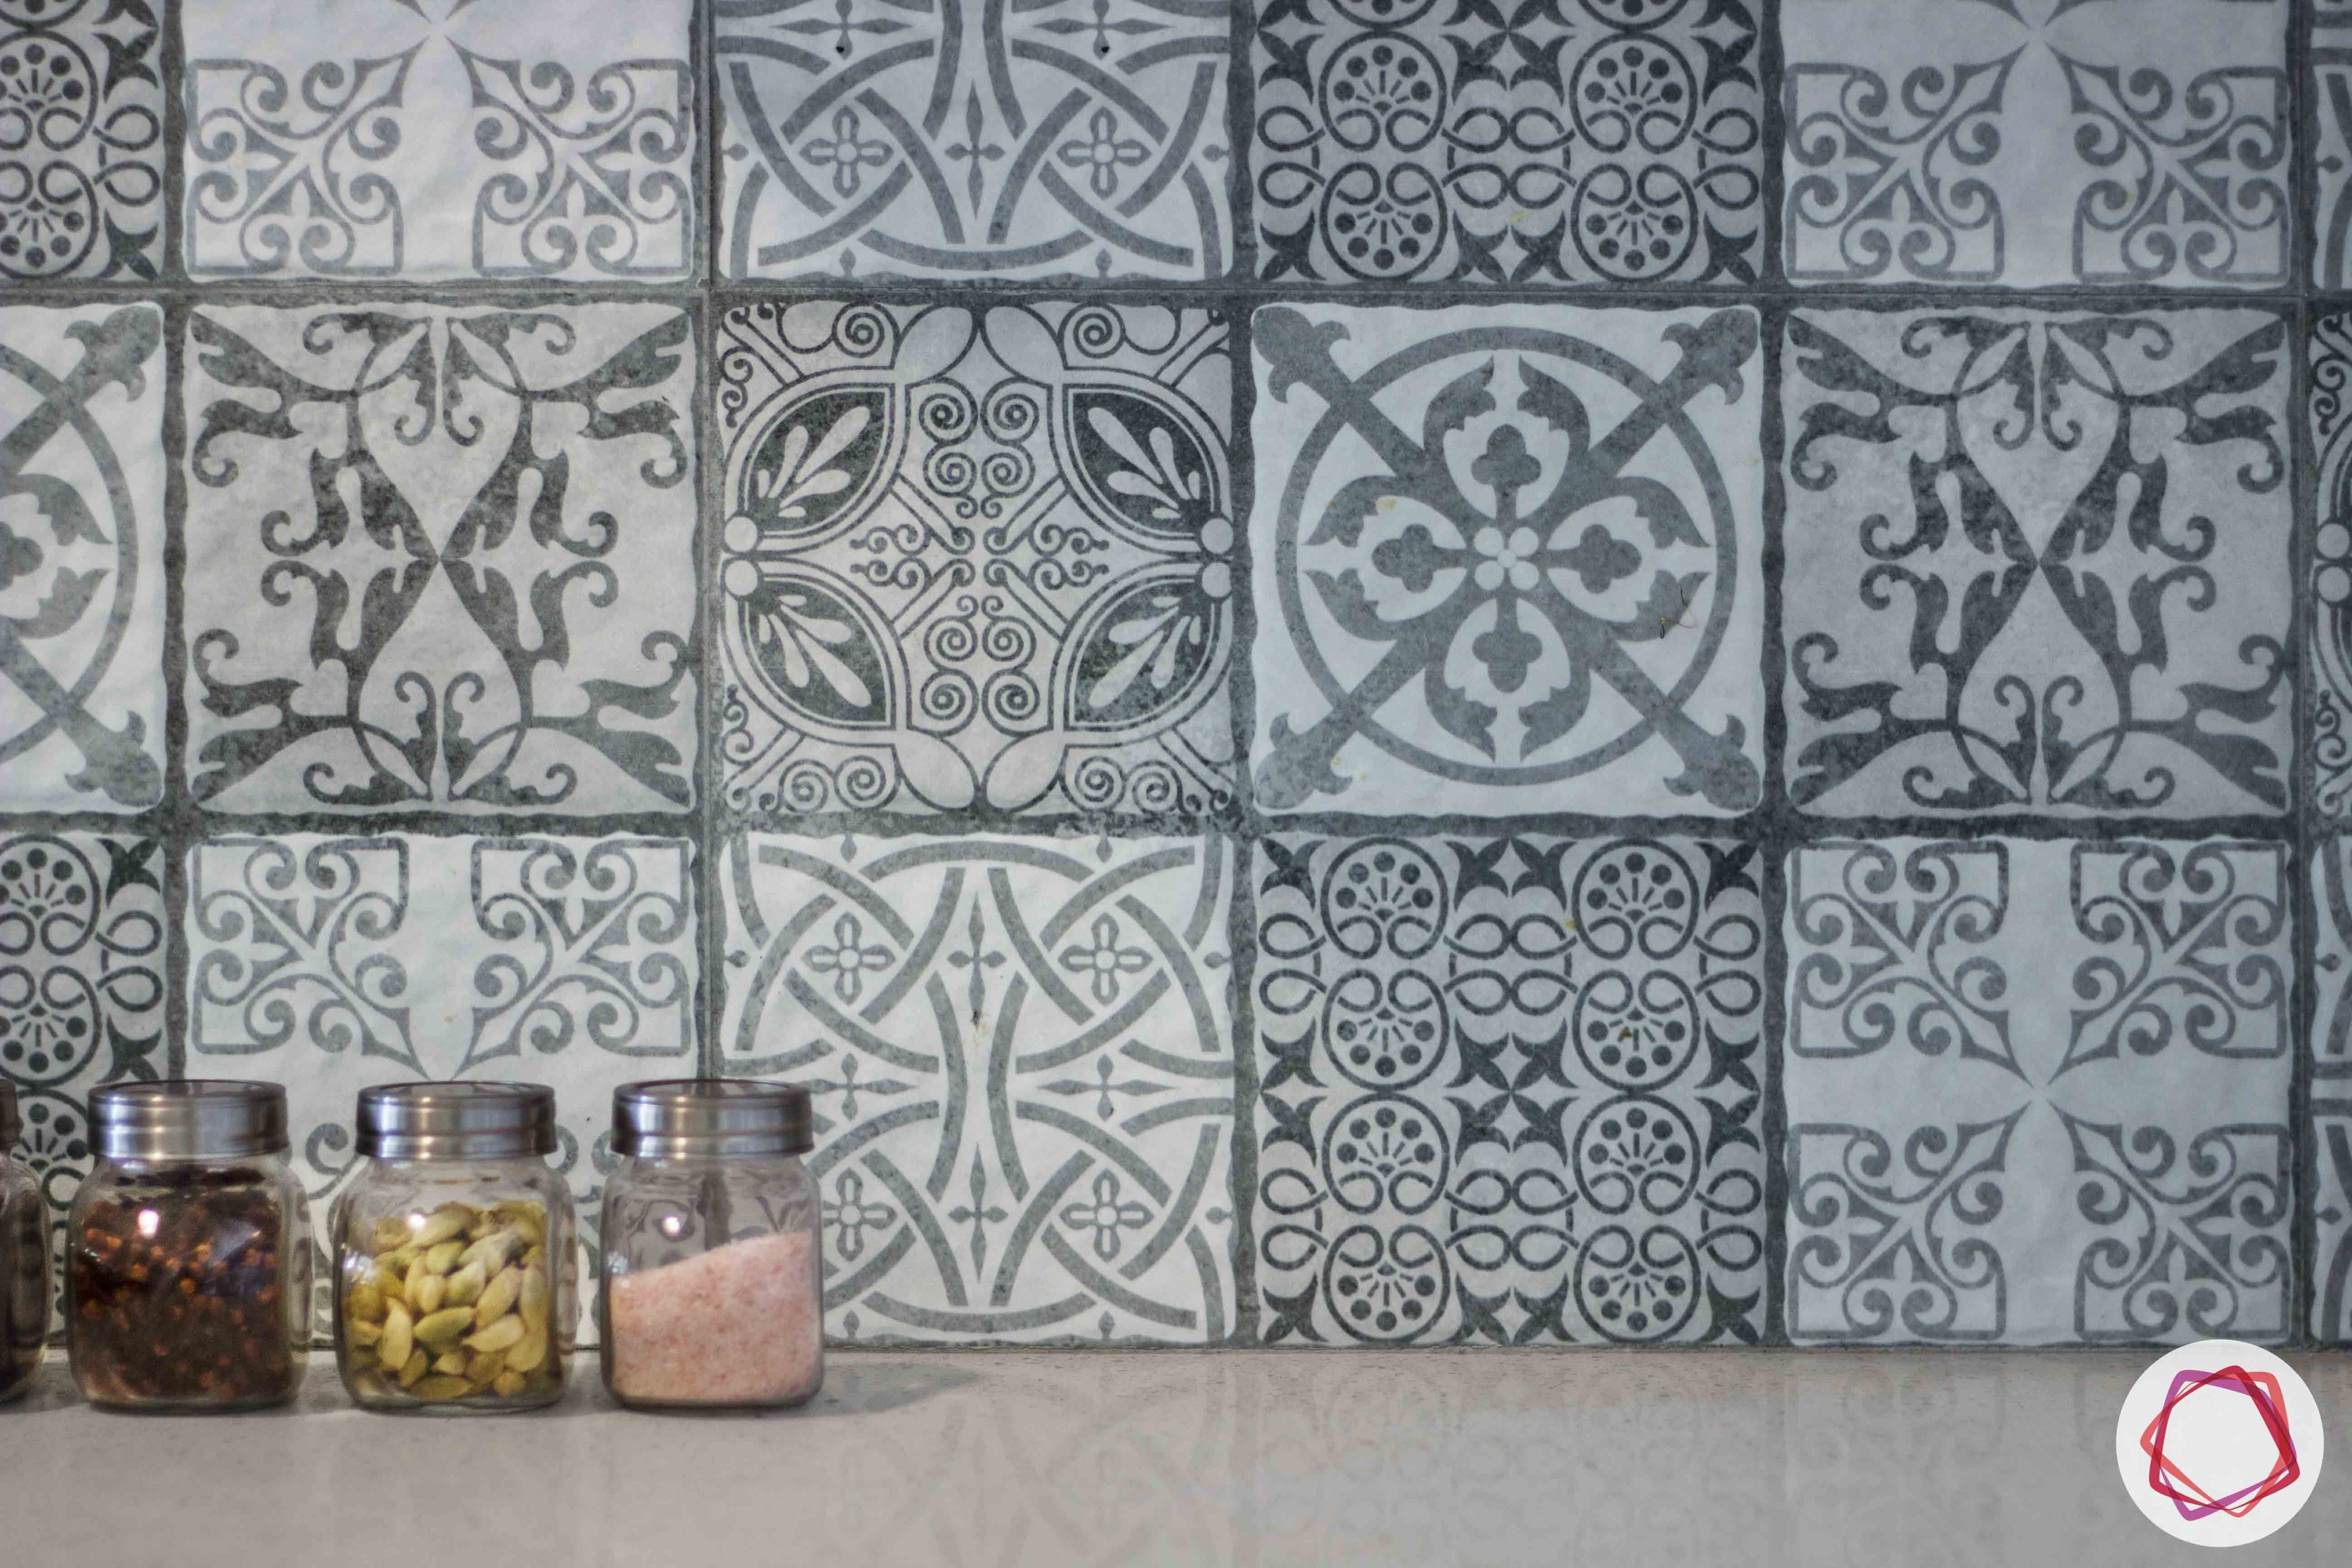 dnr atmosphere-grey tile designs-moroccan tile designs